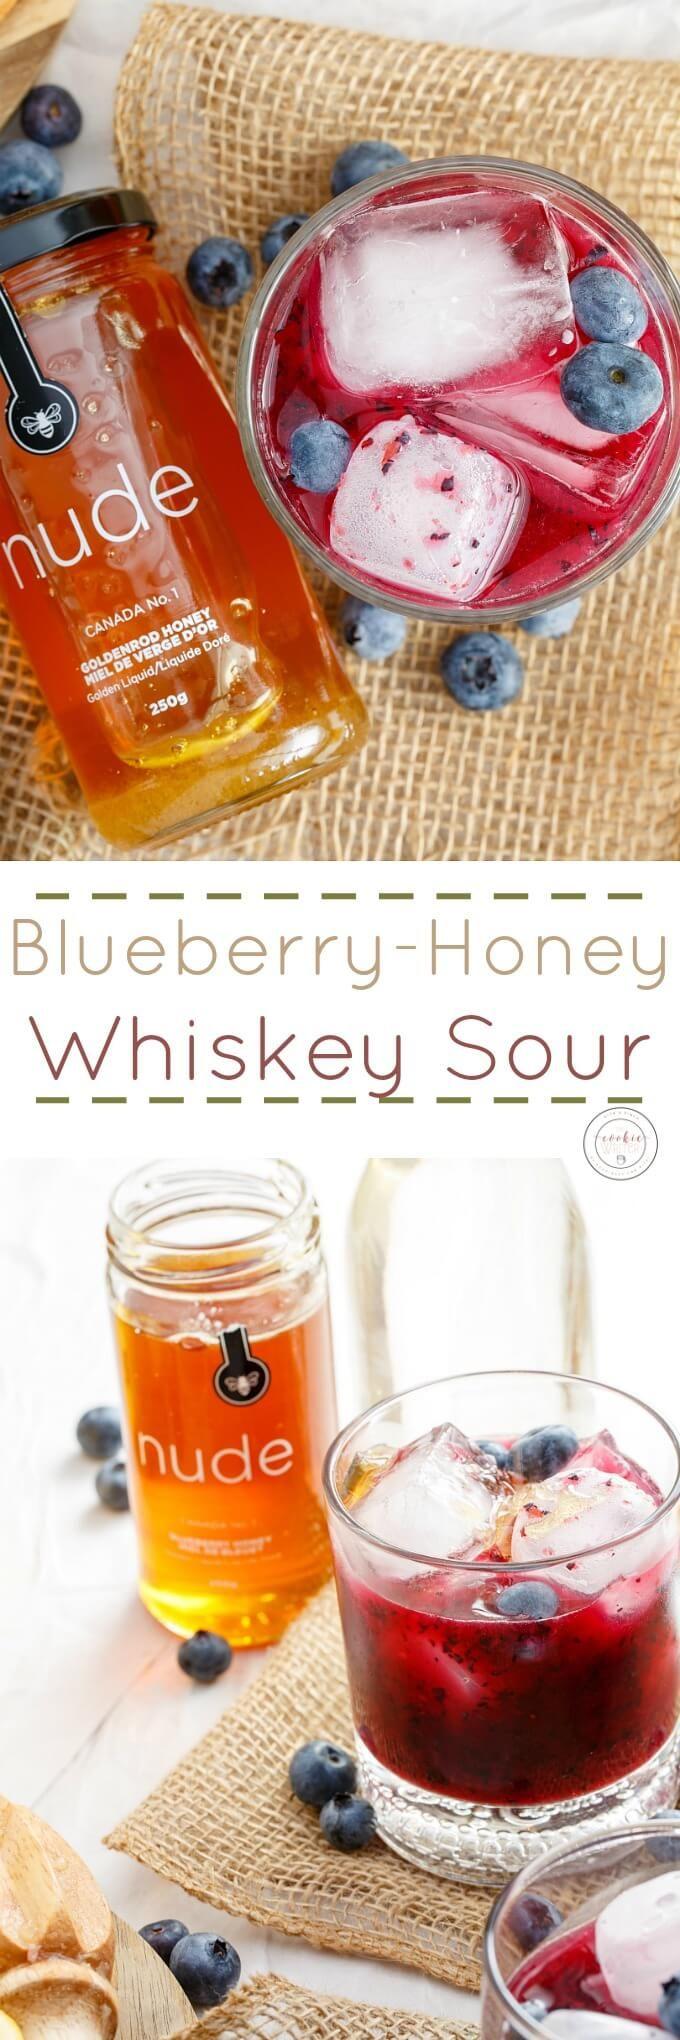 Hochzeit - Blueberry-Honey Whiskey Sour